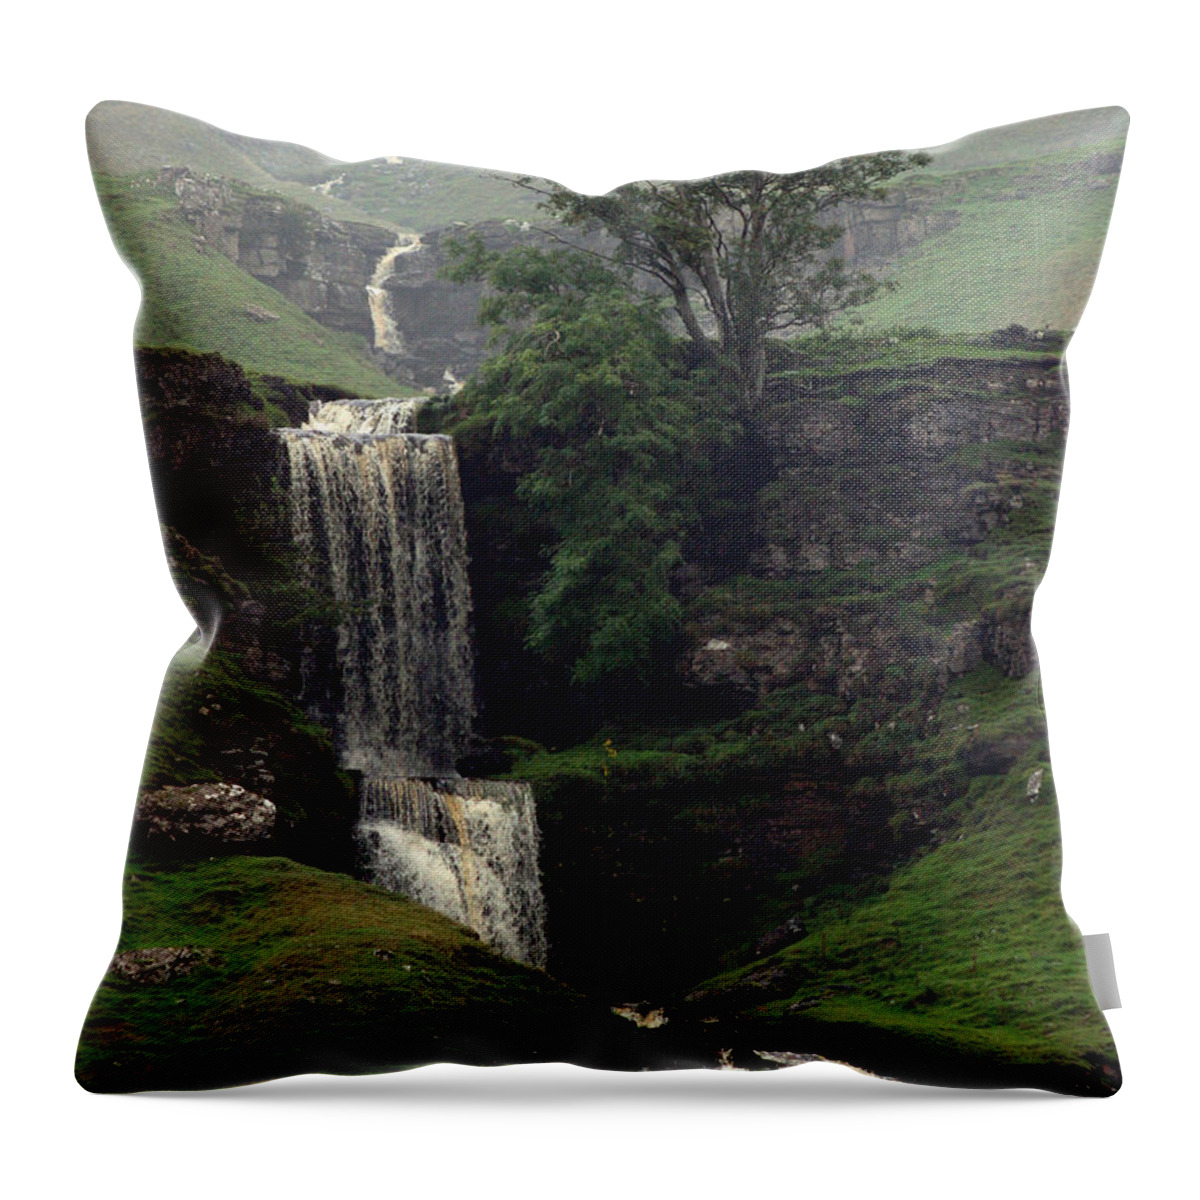 Waterfall Throw Pillow featuring the photograph Waterfall by John Topman